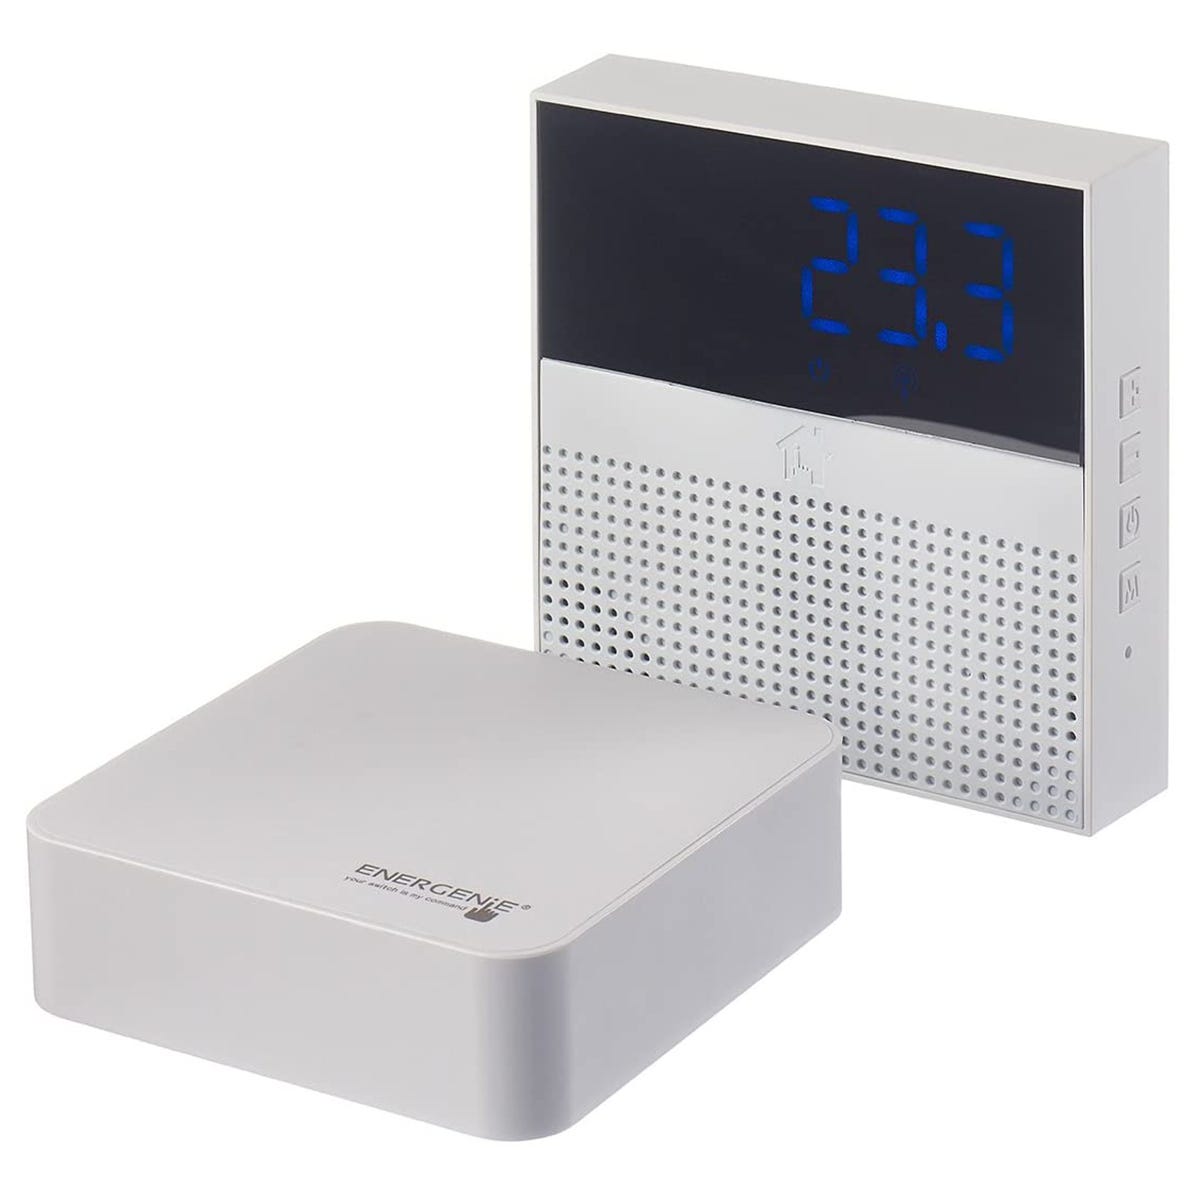 Energenie Mi Home Smart Thermostat with Gateway